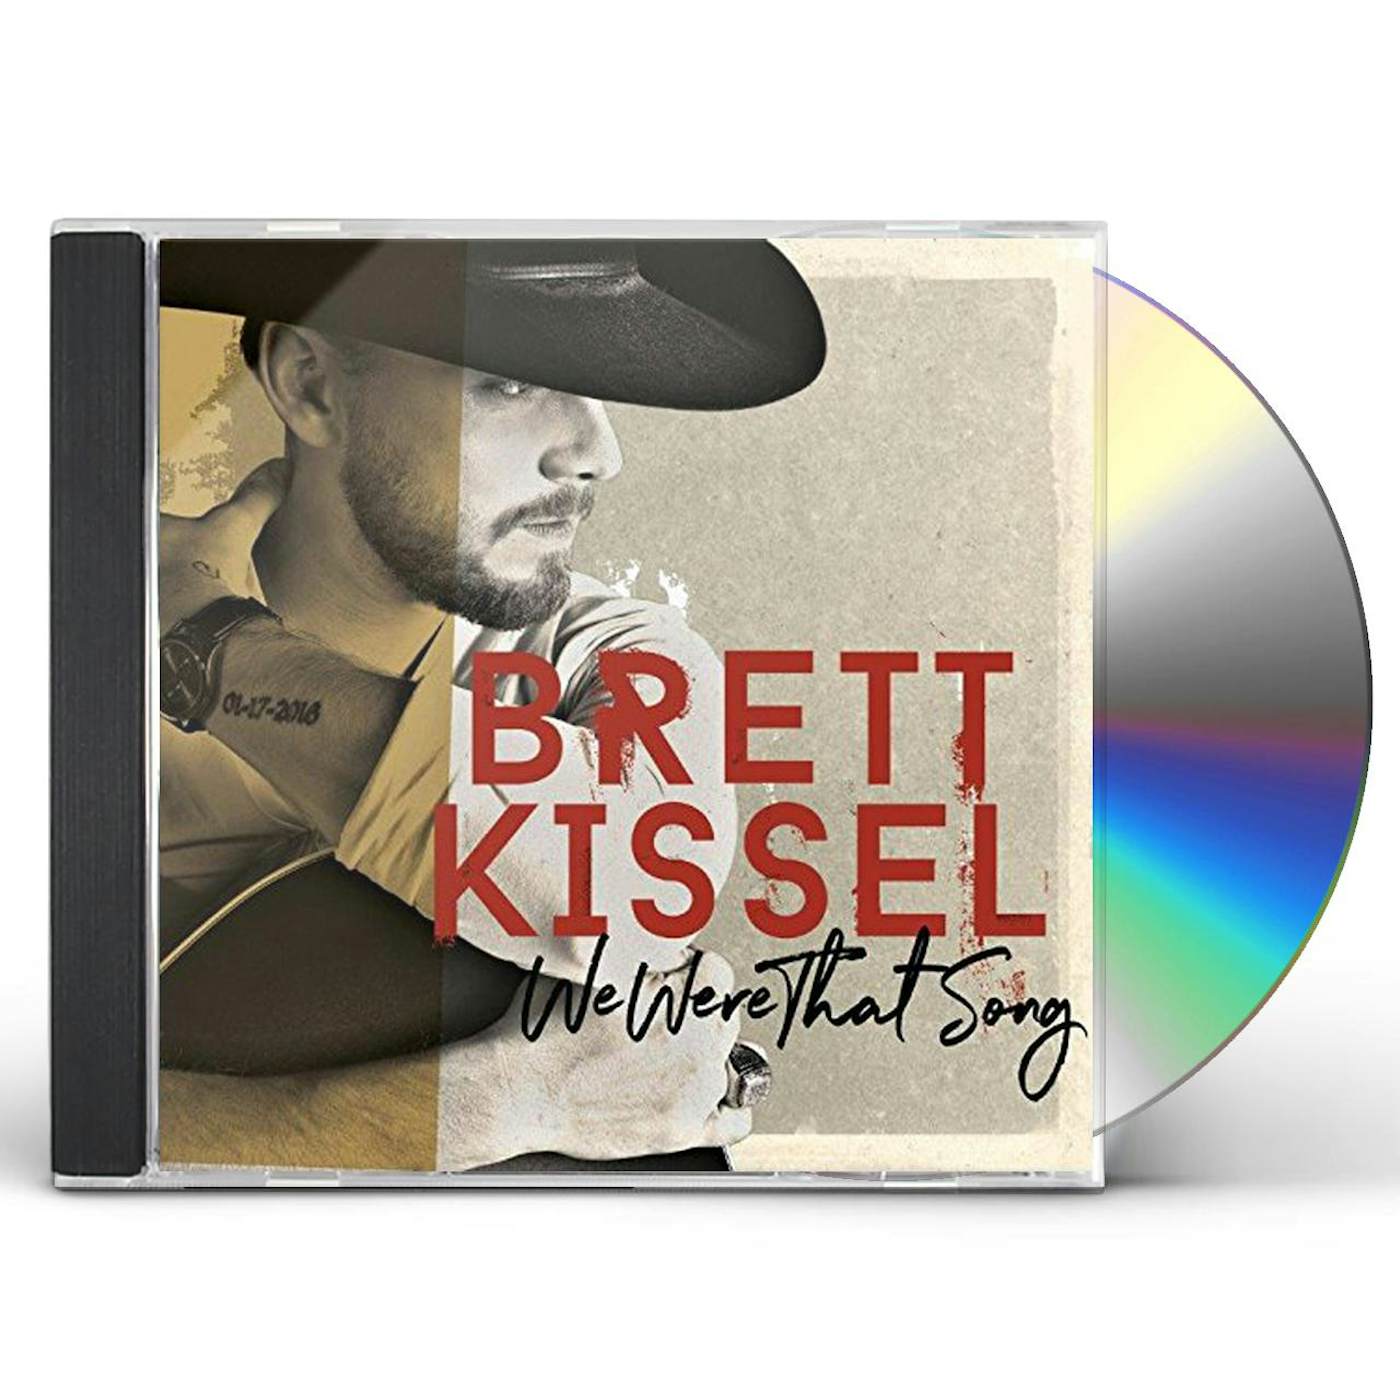 Brett Kissel WE WERE THAT SONG CD